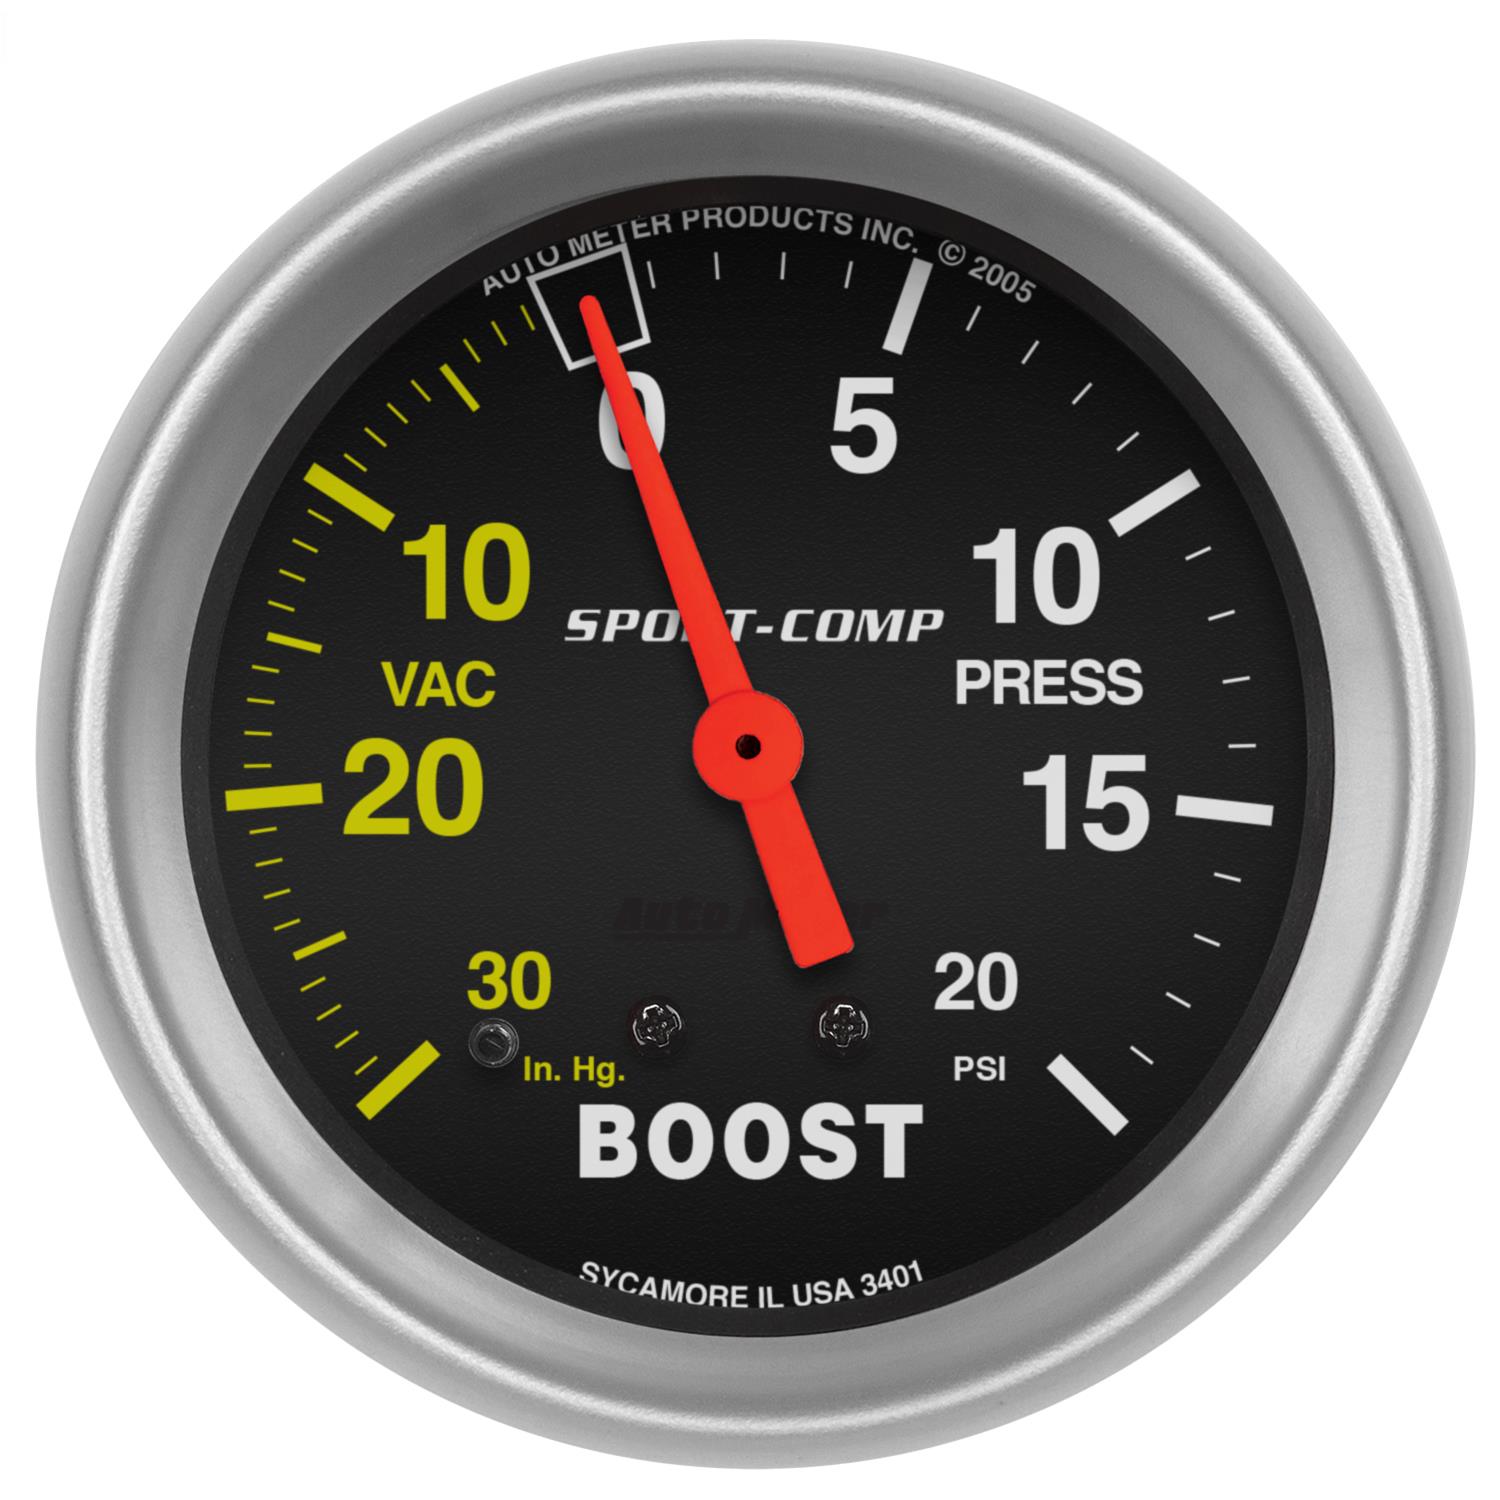 Manomètre pression turbo Auto meter ref 3401 - Vintage Garage